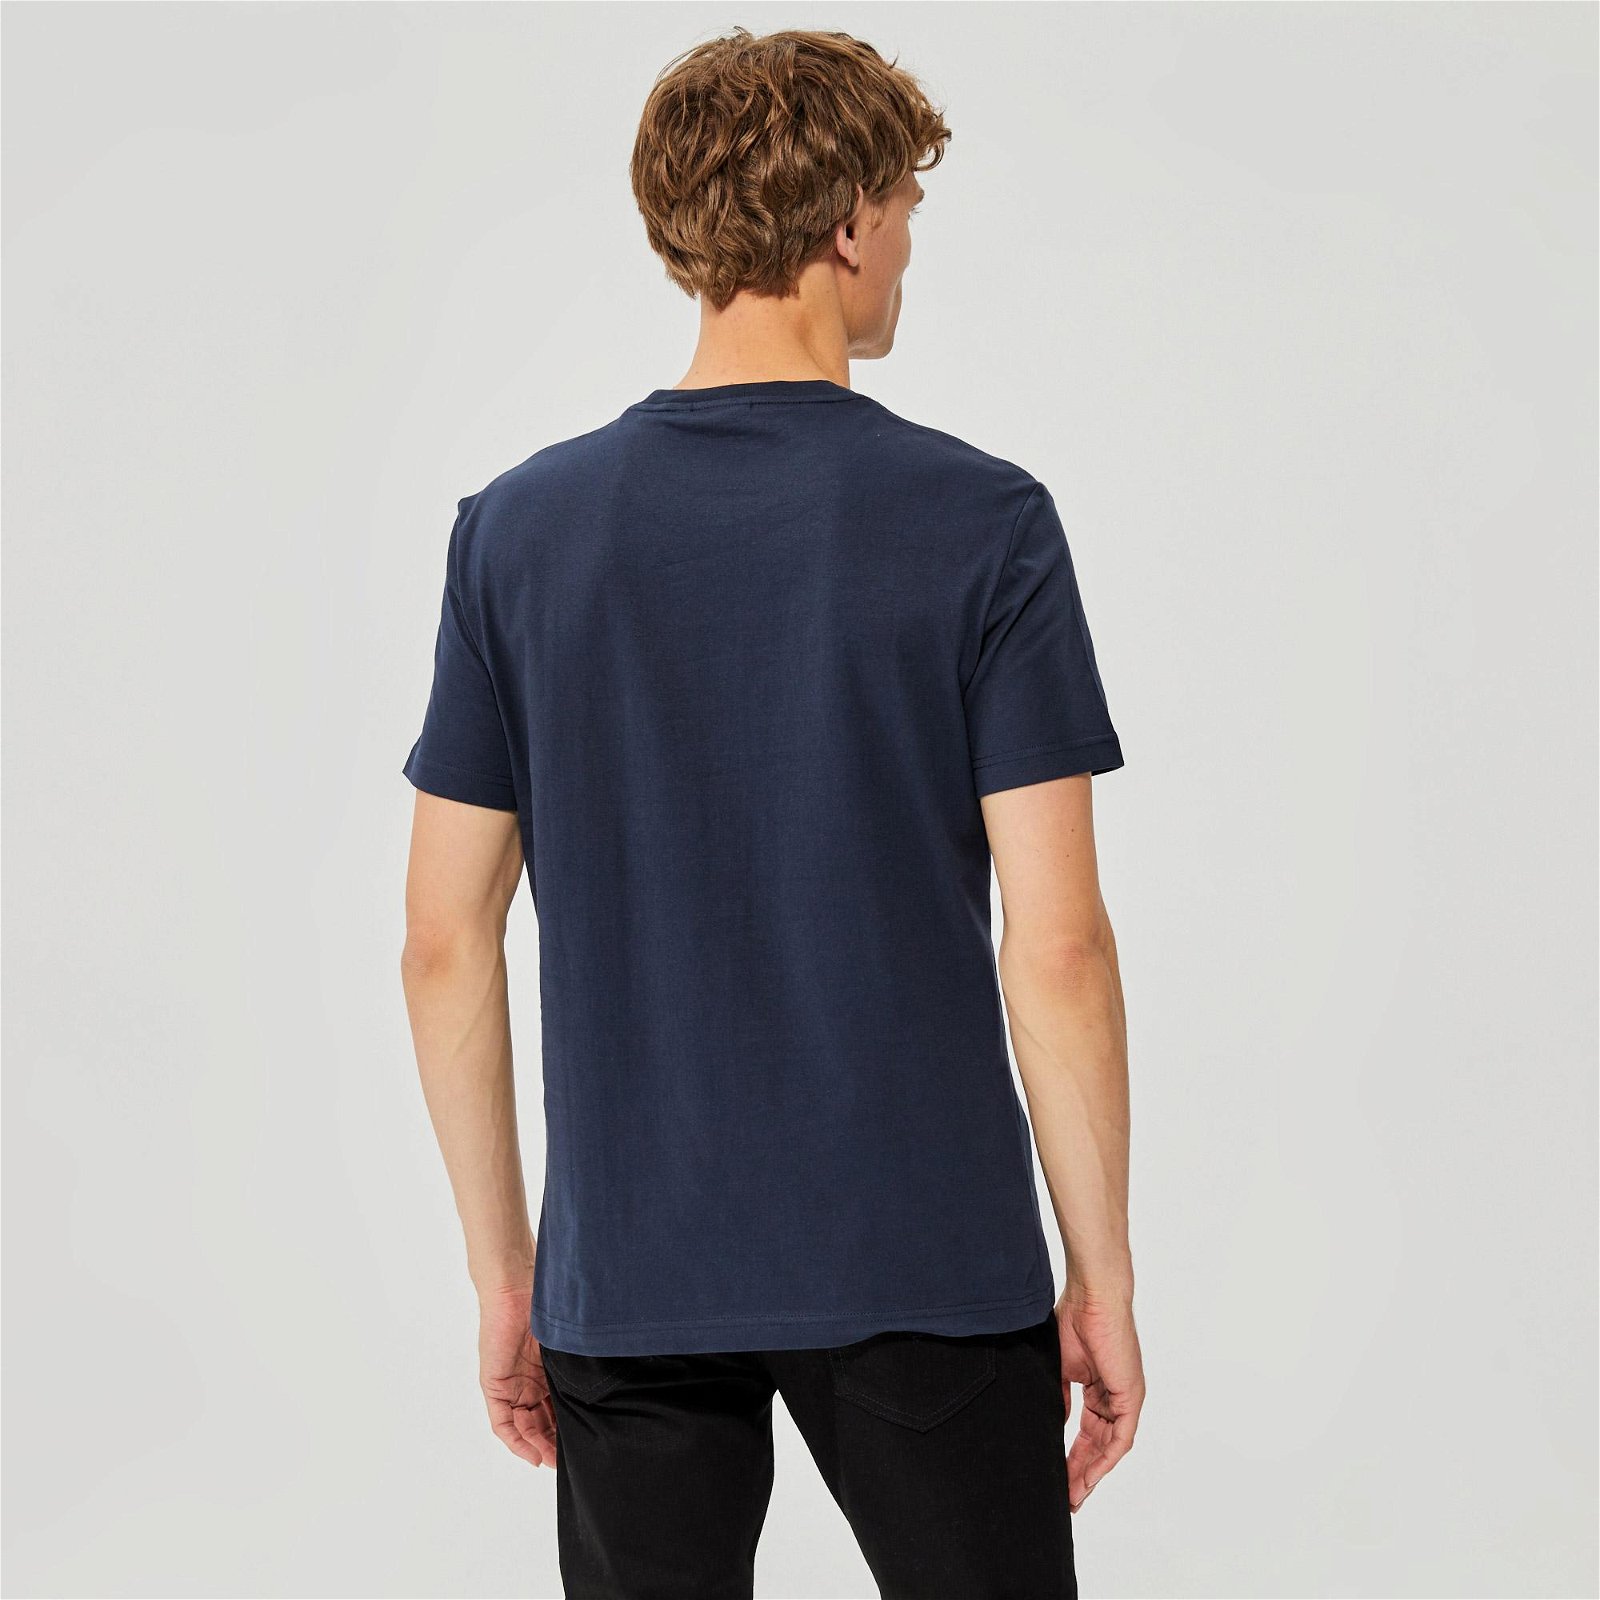 Calvin Klein Distorted Logo Erkek Mavi T-Shirt